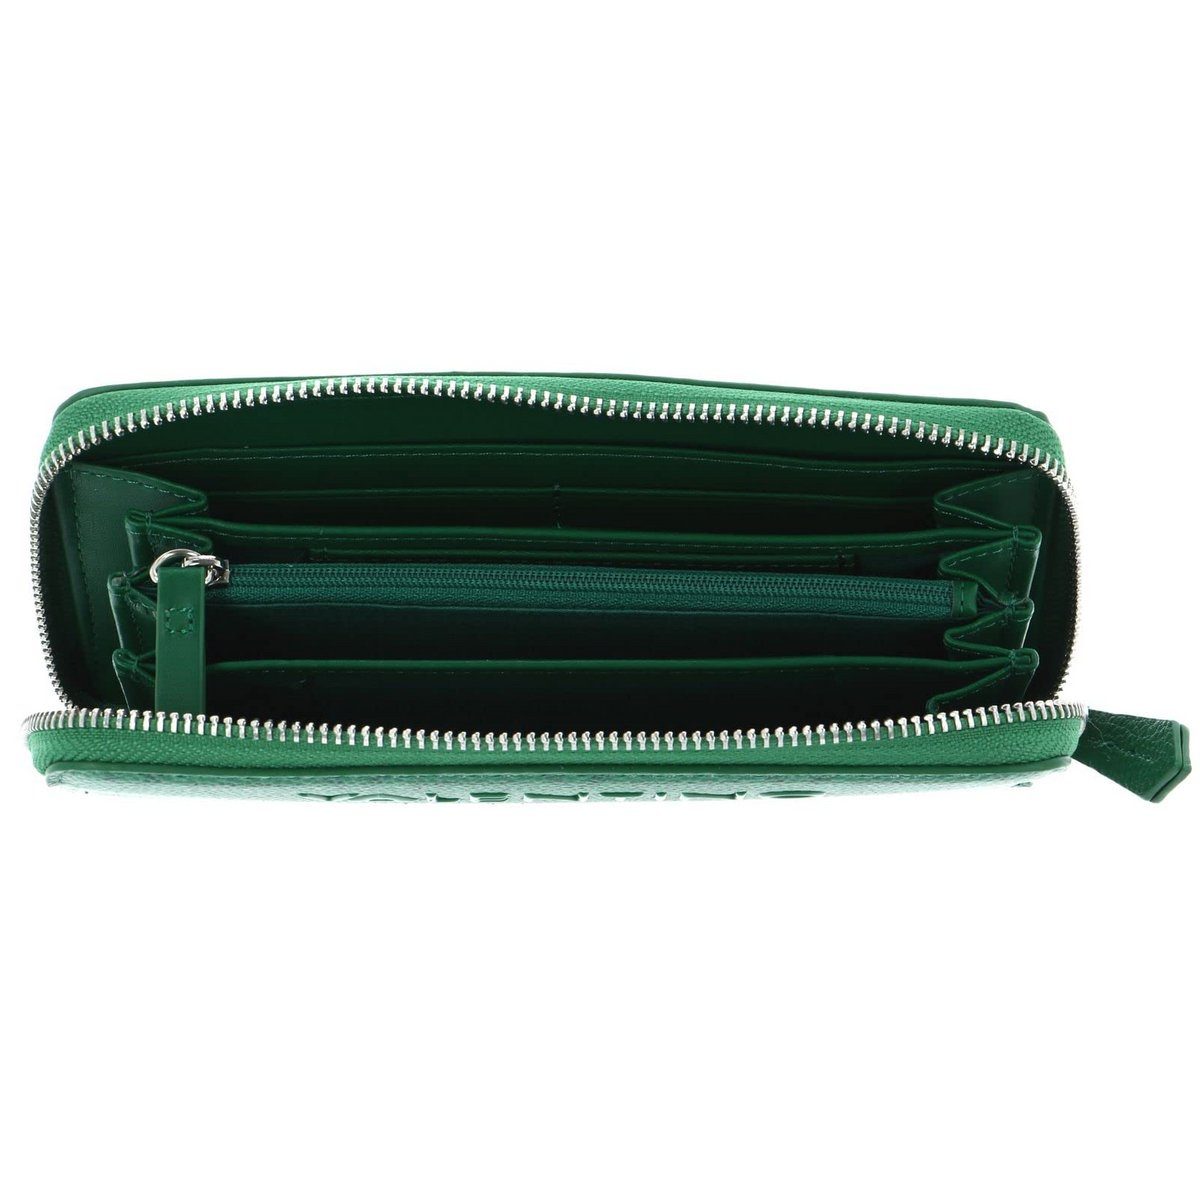 (1-tlg., Angabe) BAGS Multicolor keine Geldbörse / Verde VALENTINO grün